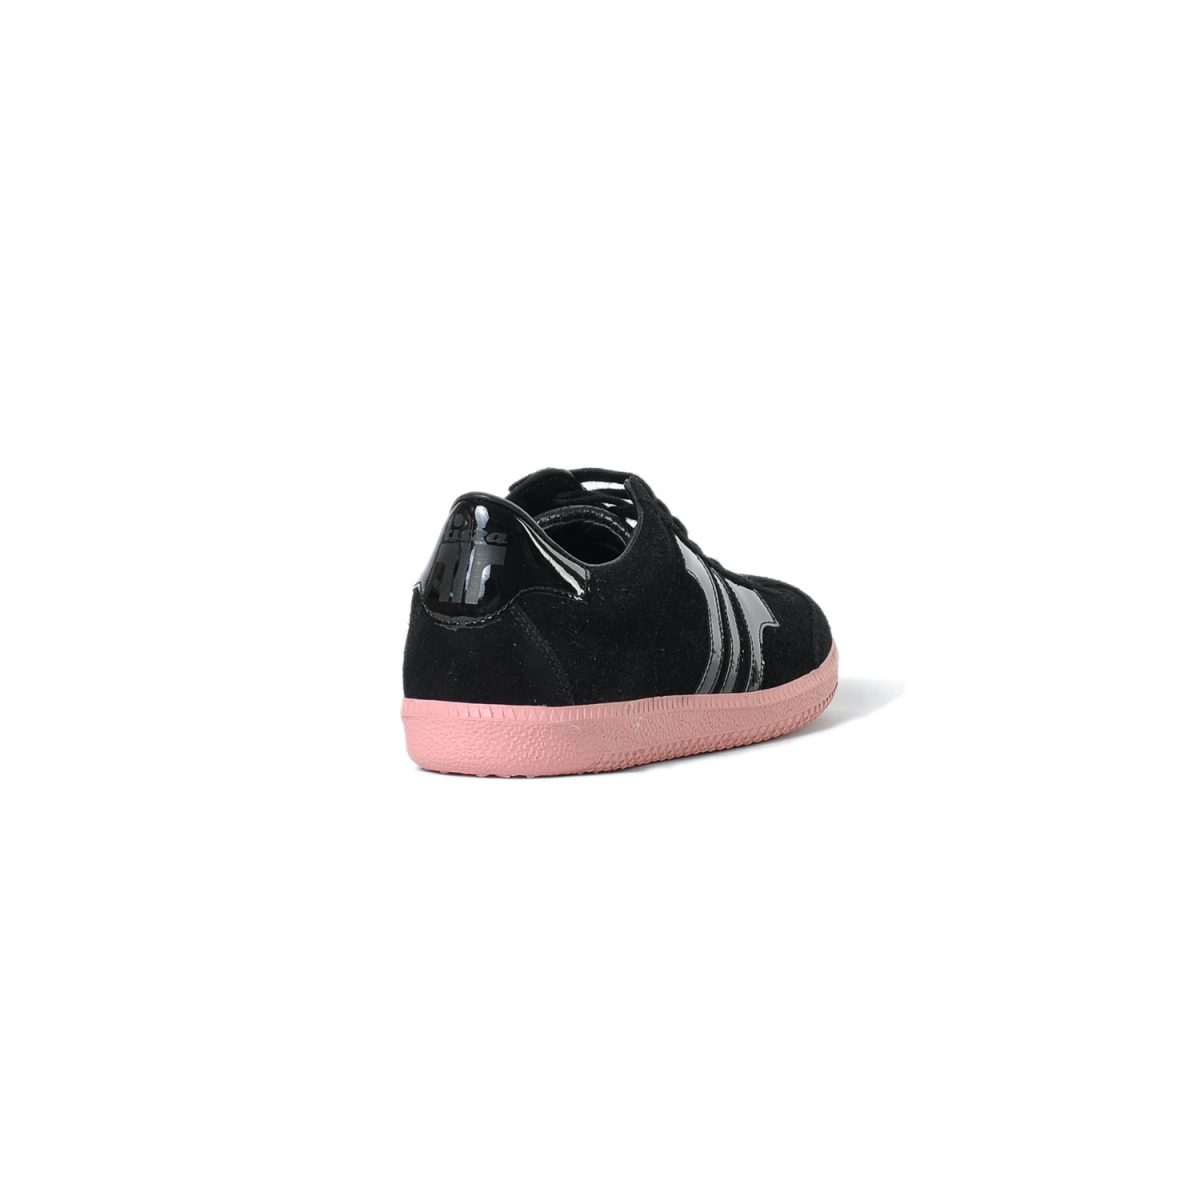 Tisza cipő - Comfort - Fekete-púder